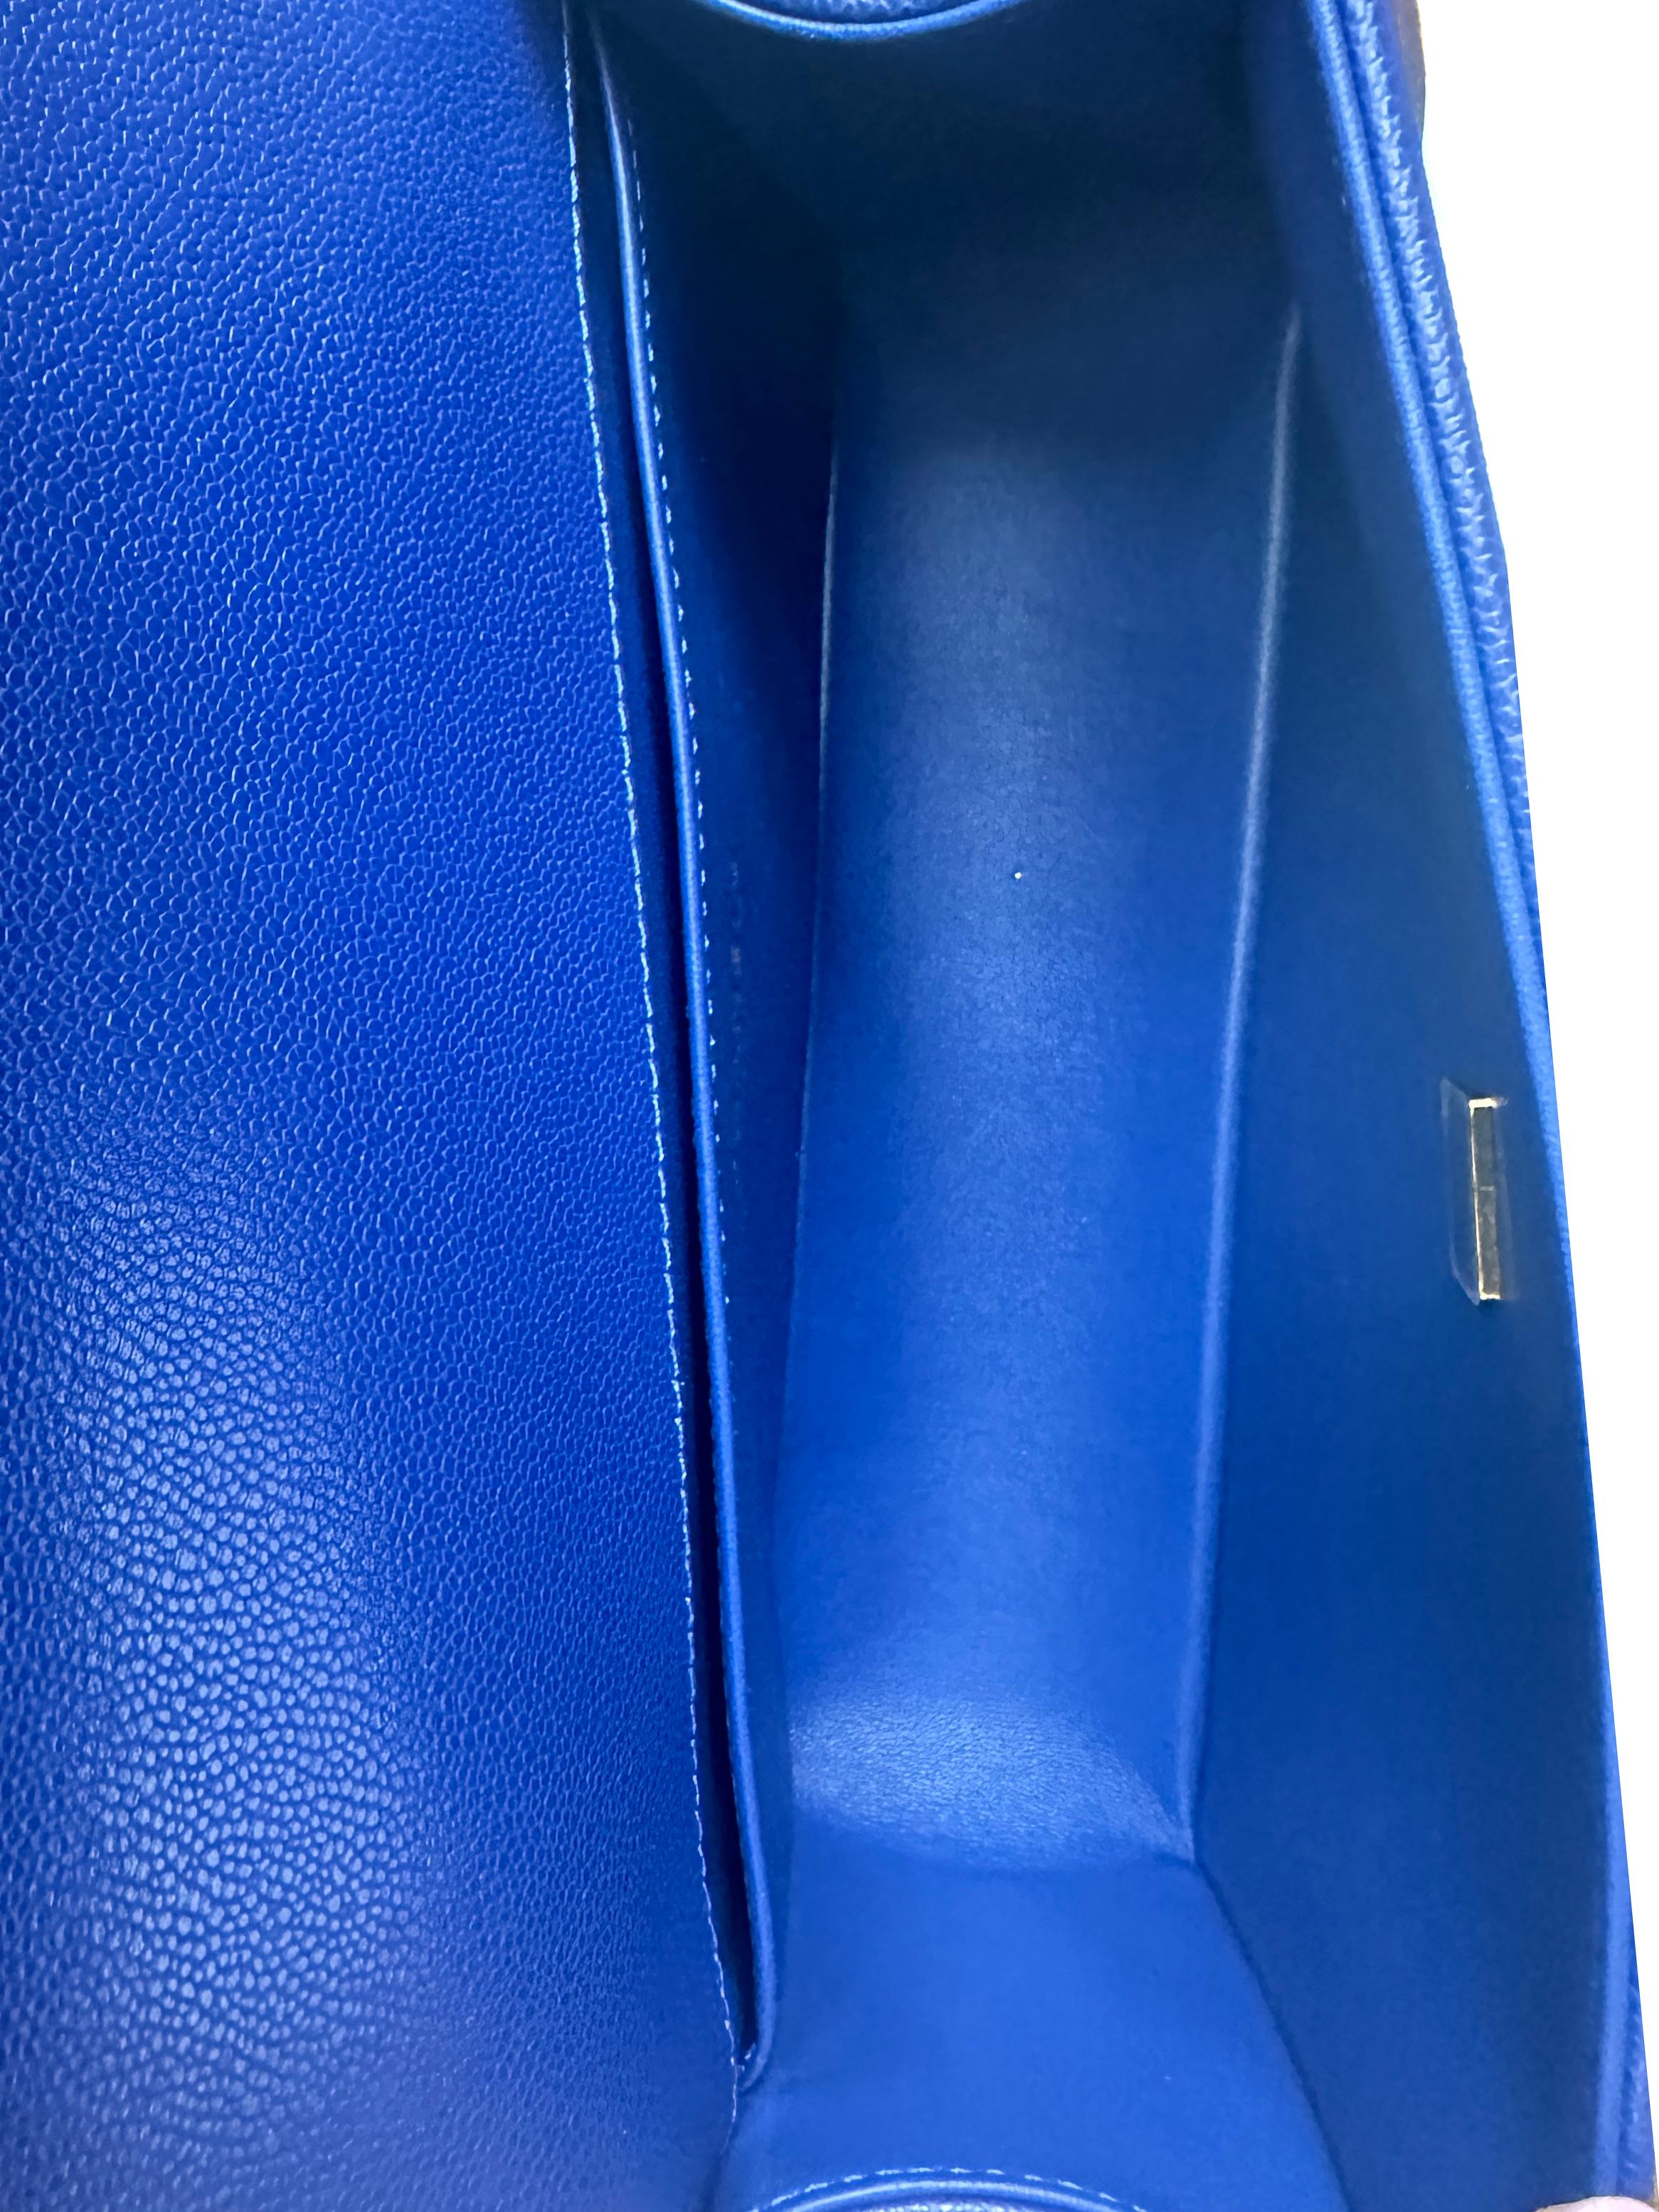 Chanel NEW Cobalt Blue Caviar Leather Quilted Medium Boy Bag 3